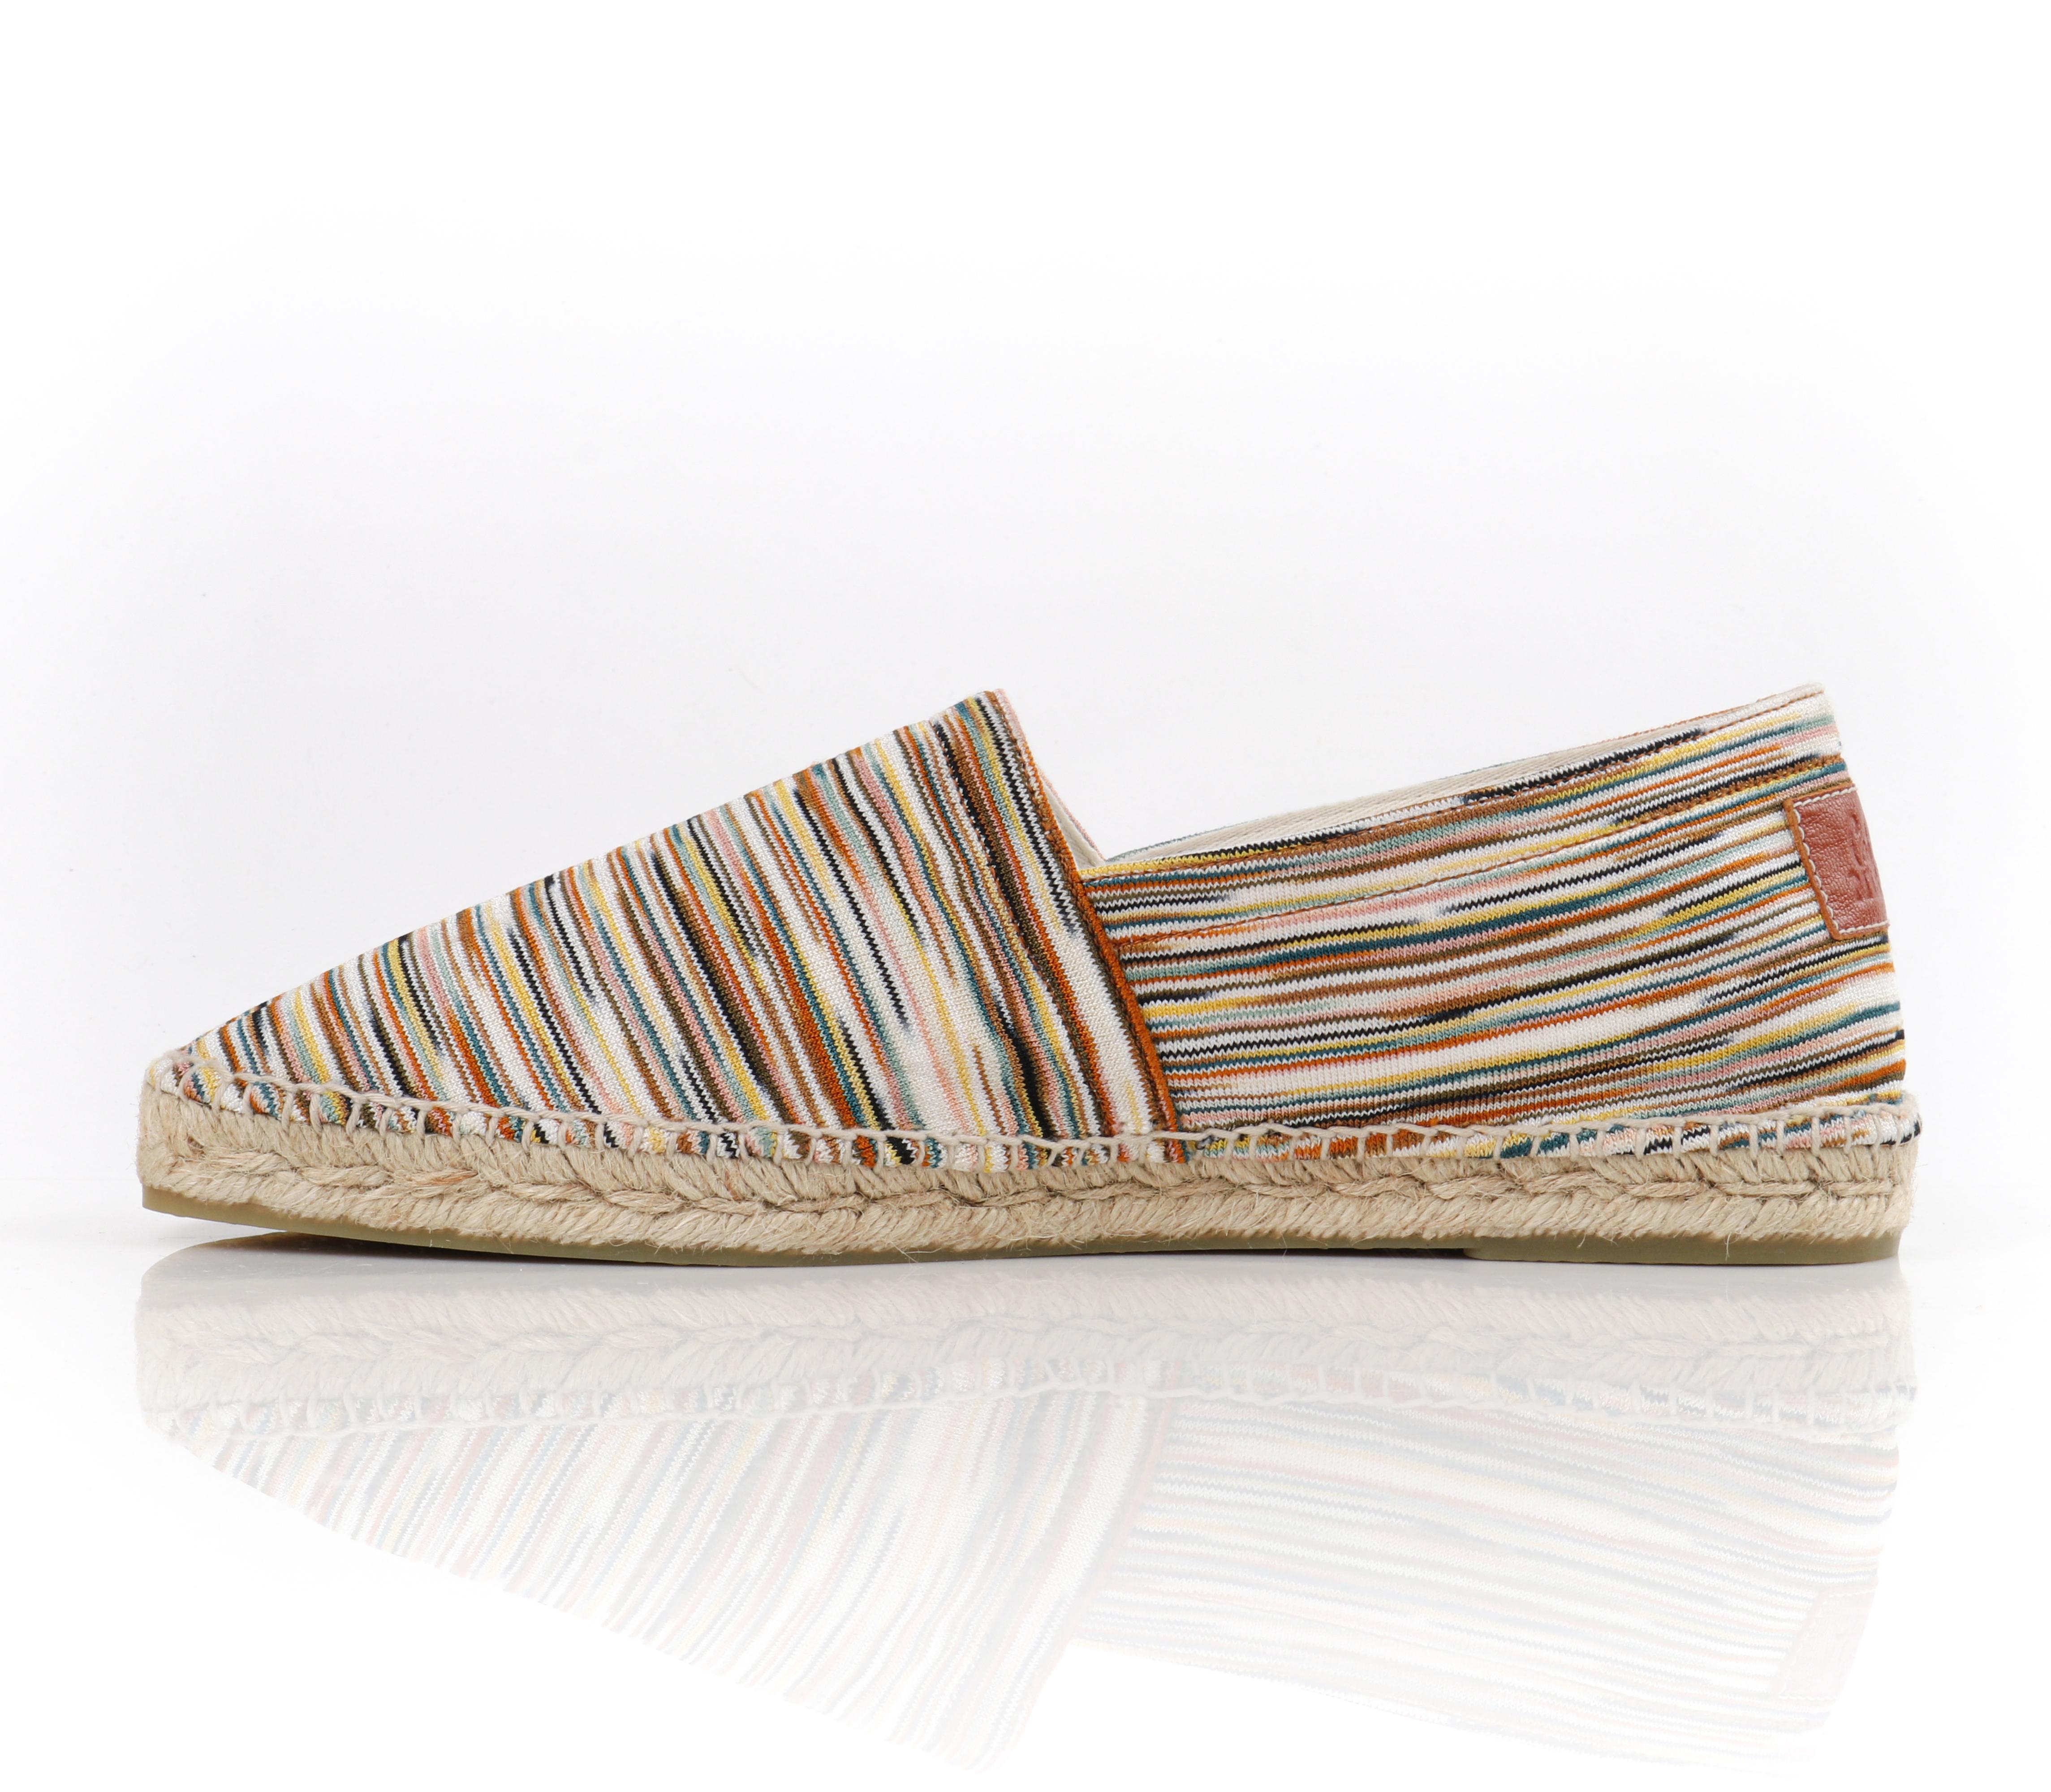 Beige MISSONI Castañer S/S 2019 Multicolor Stripe Jute Rope Kenda Espadrilles Shoes 